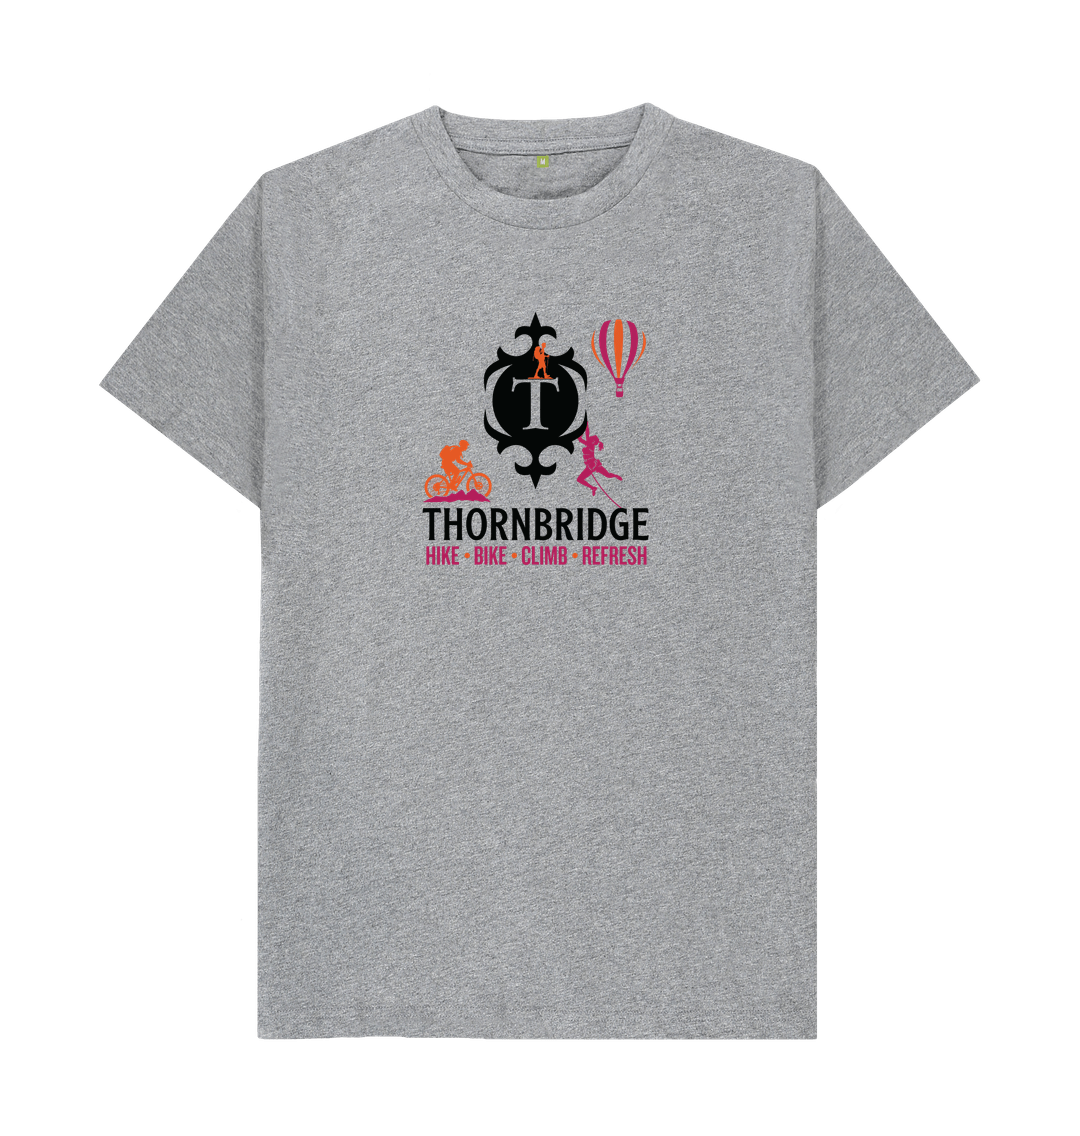 Thornbridge Hike, Bike, Climb, Refresh Tee Shirt Printed T-shirt Thornbridge